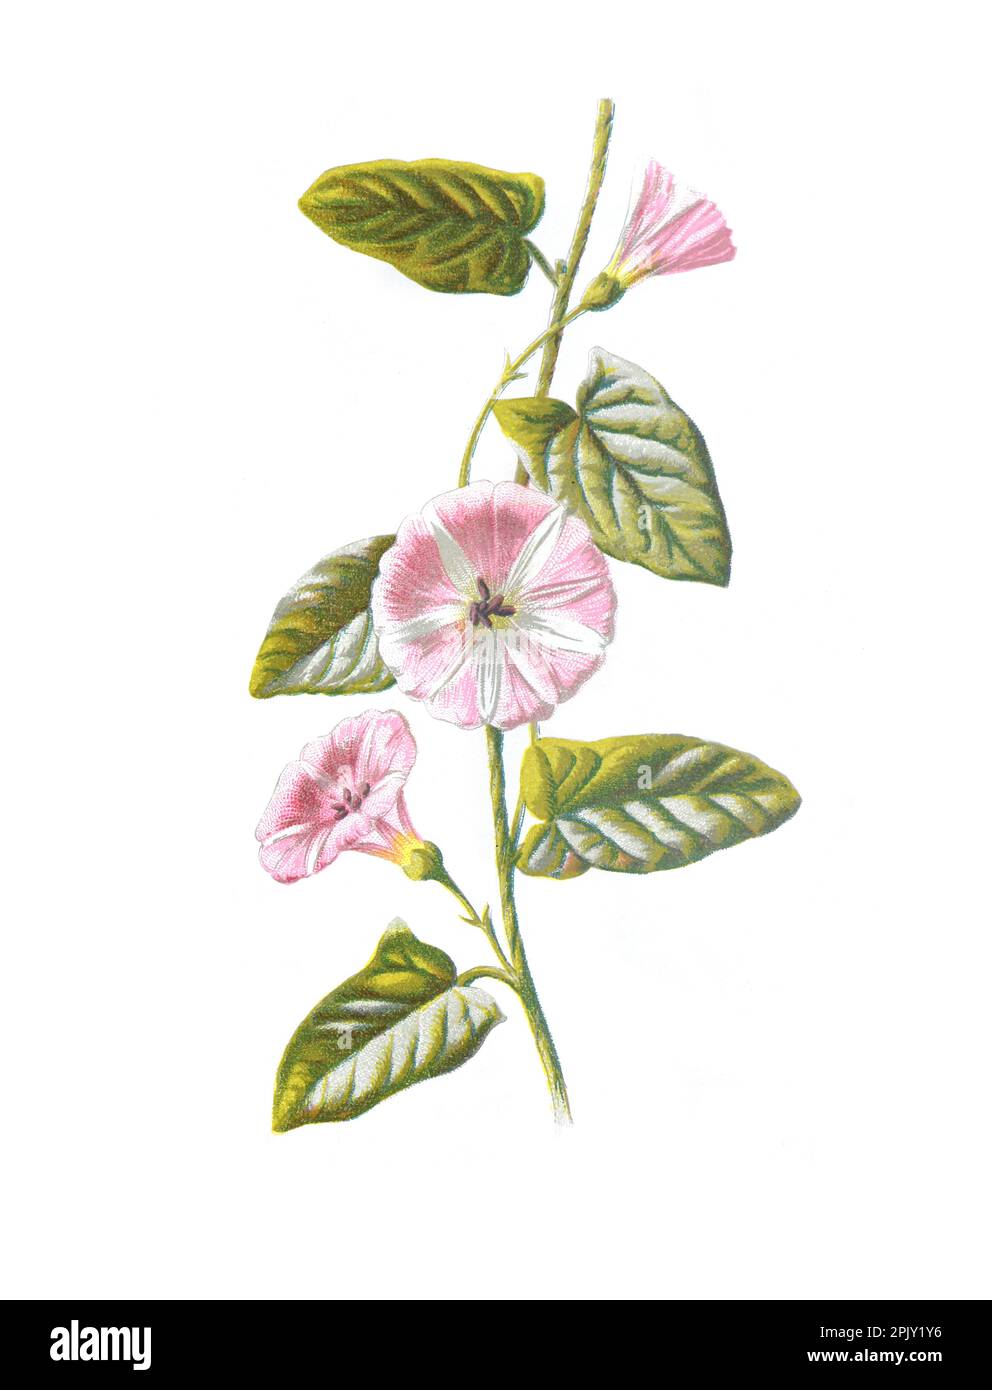 Vintage and antique flowers. Convolvulus arvensis, the field bindweed (Calystegia sepium). Antique hand drawn flowers illustration. Wild flower. Stock Photo